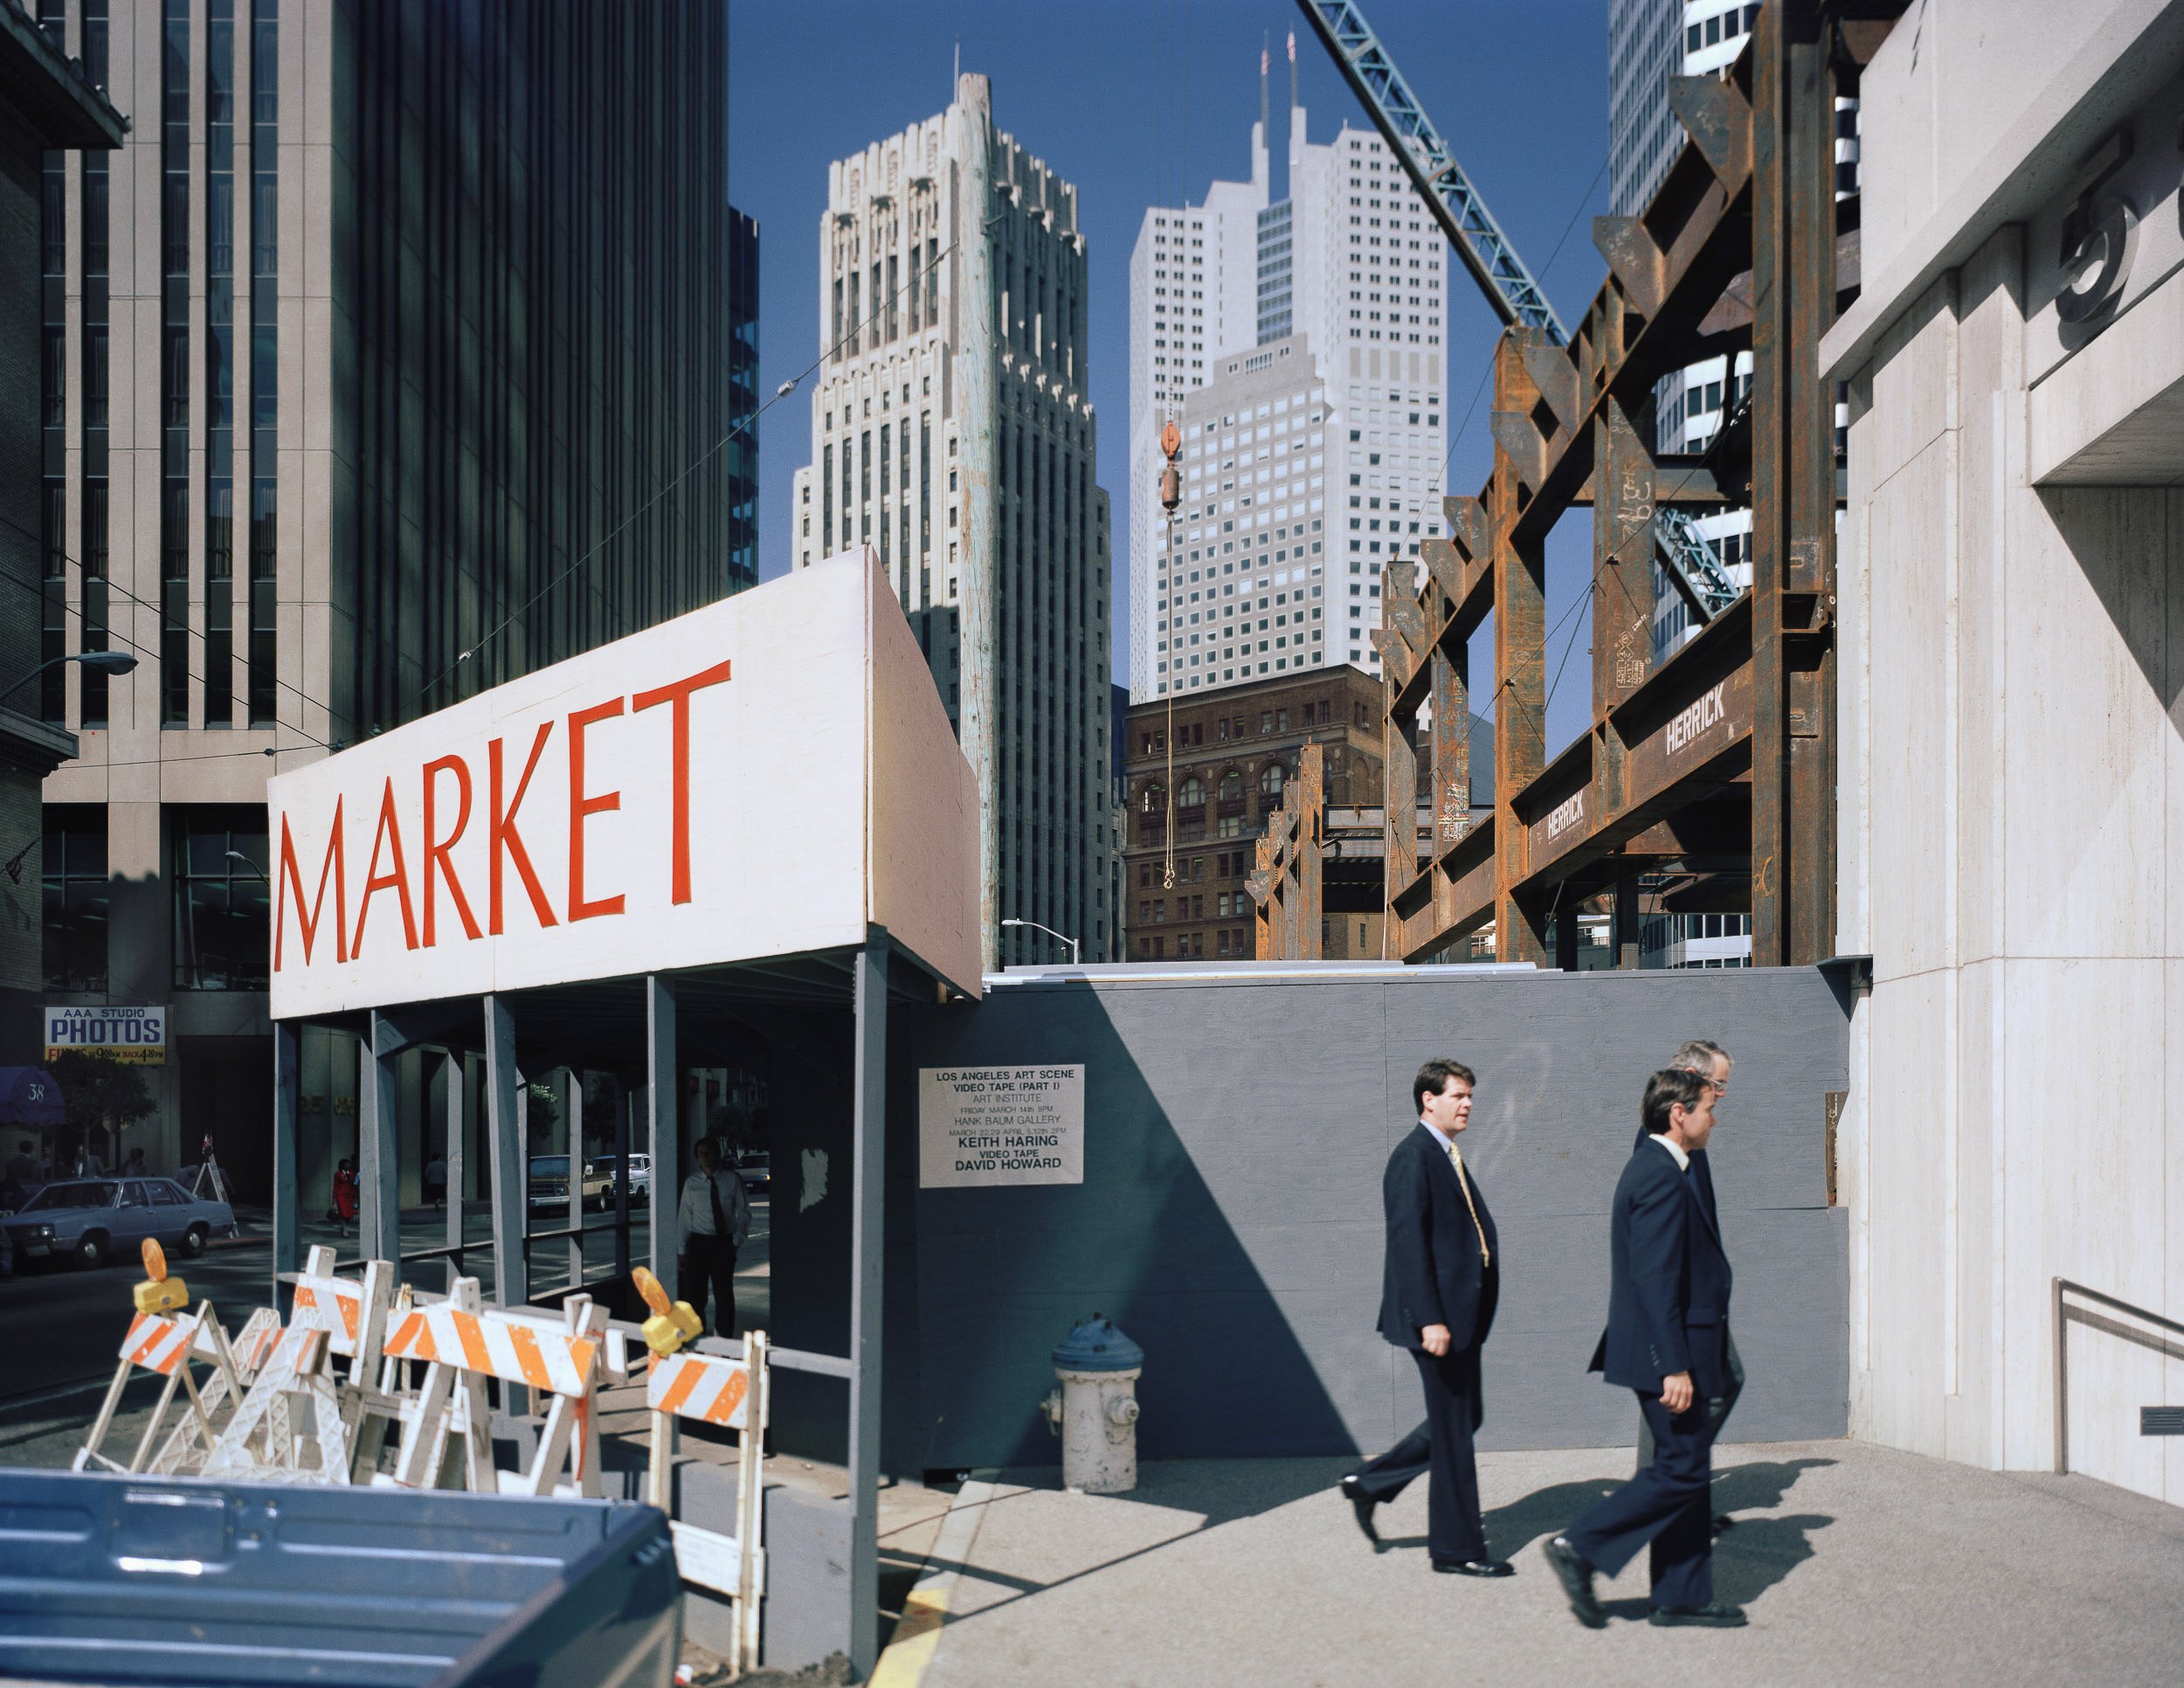   2nd at Market Street, 1986  